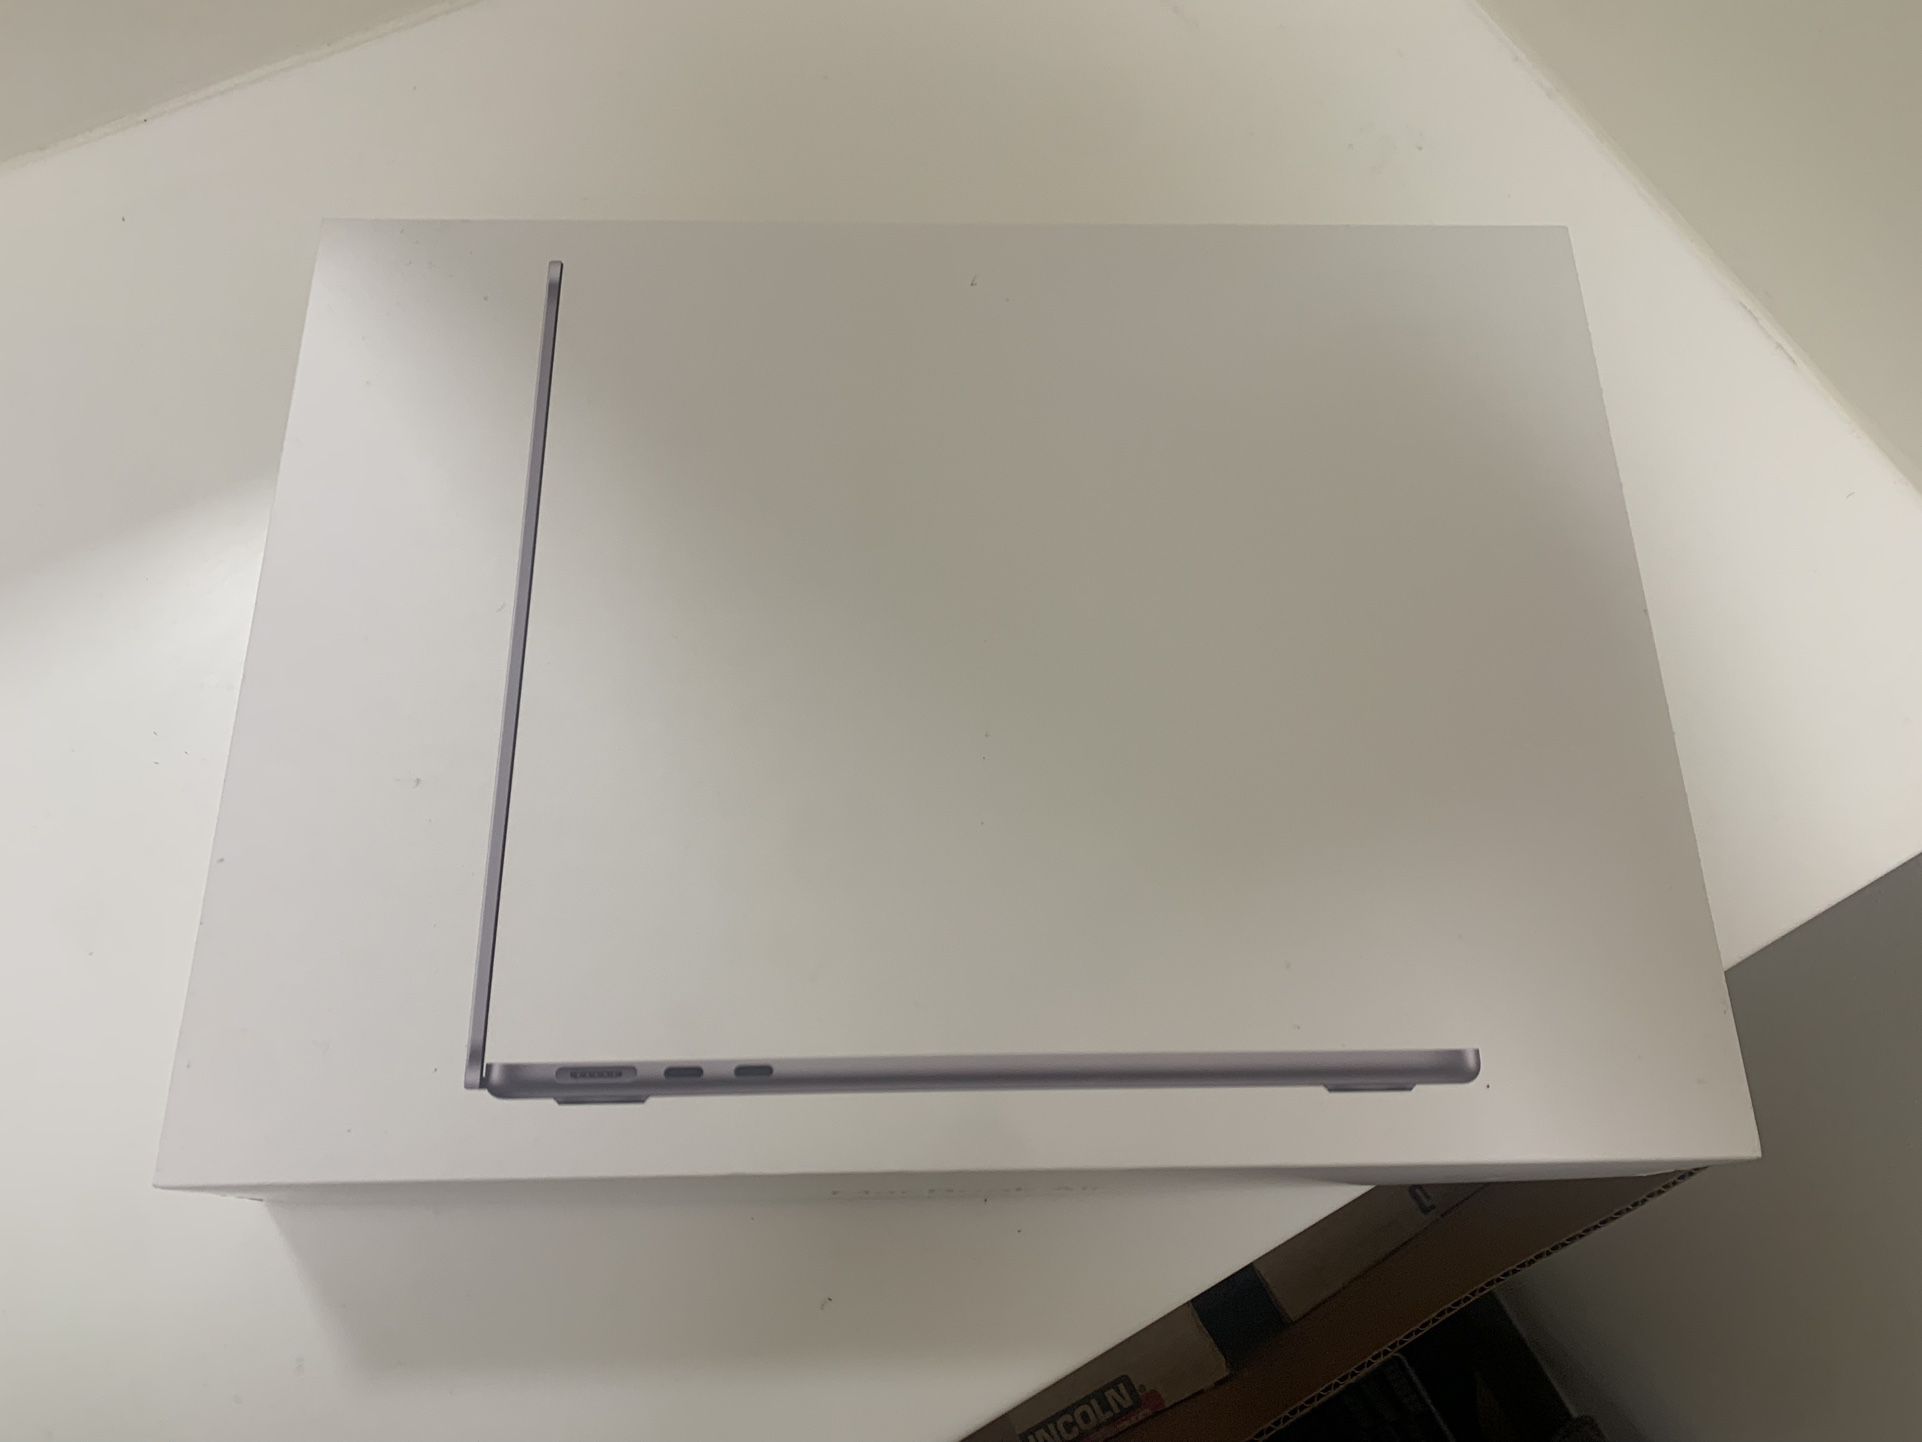 	MacBook Air 13.6" Laptop 